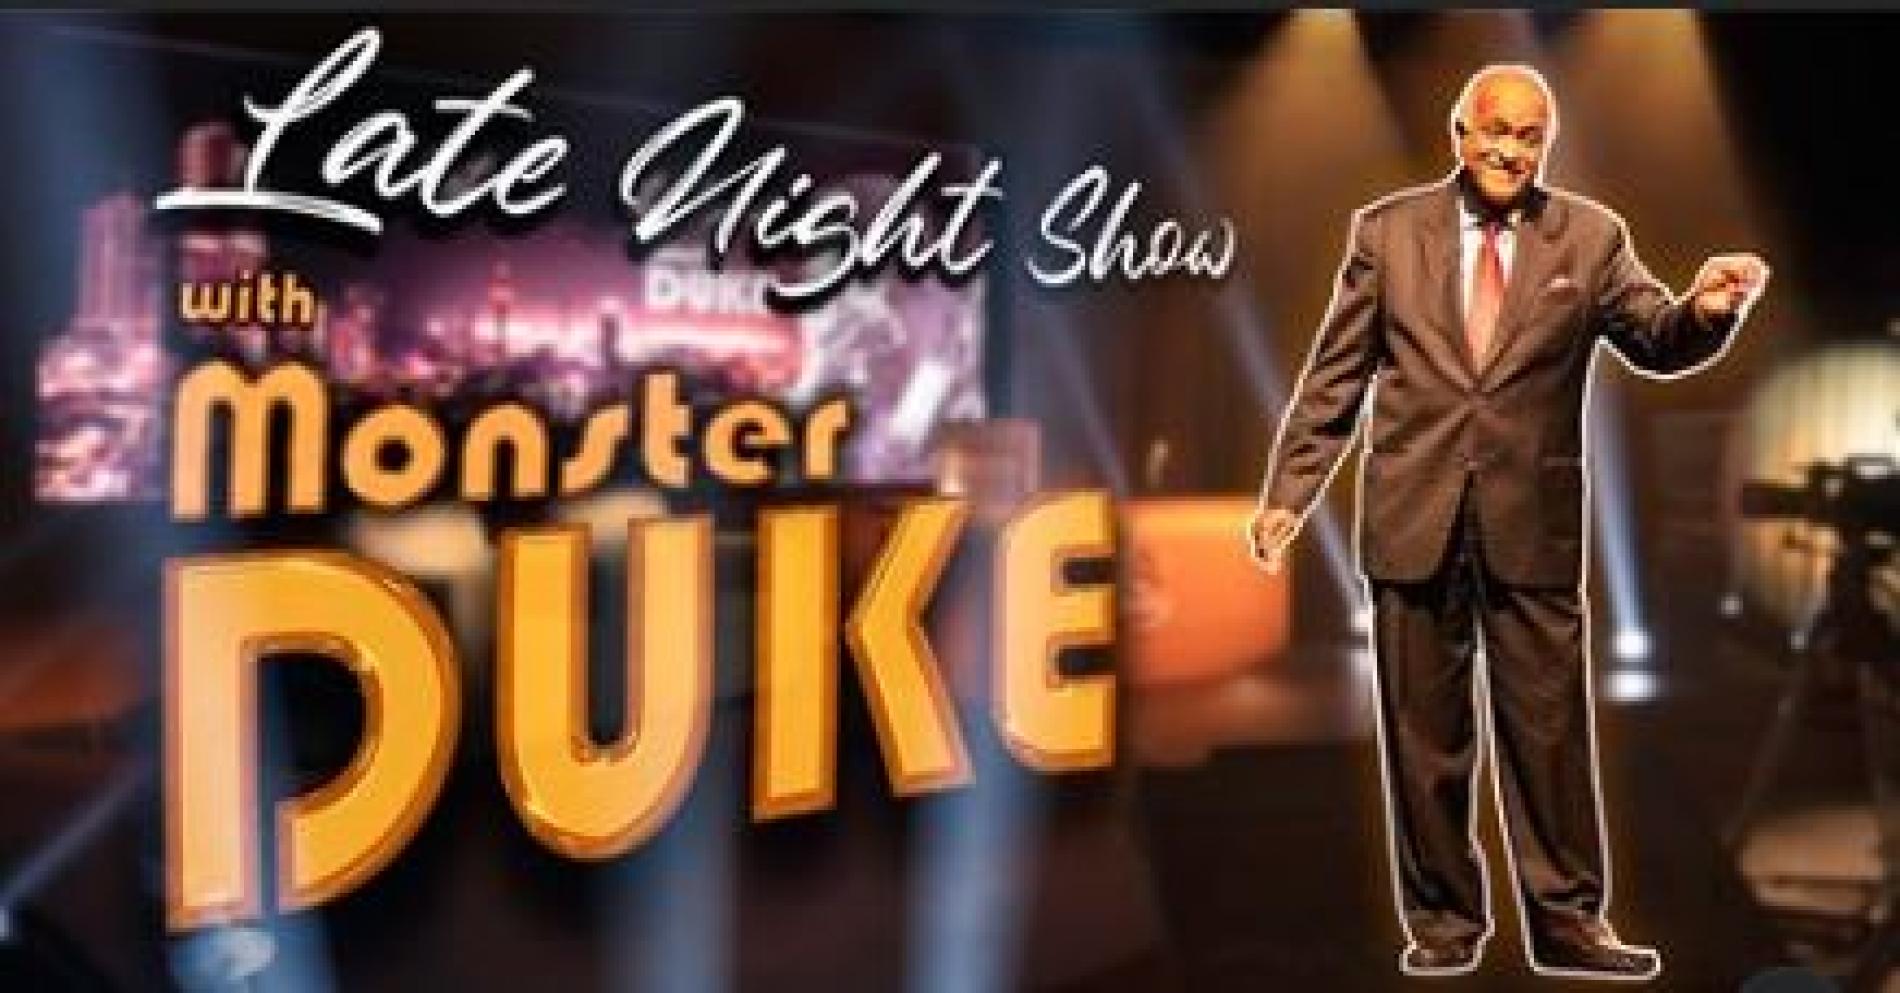 New Music : Sakura Full Interview | Late Night Show with Monster Duke